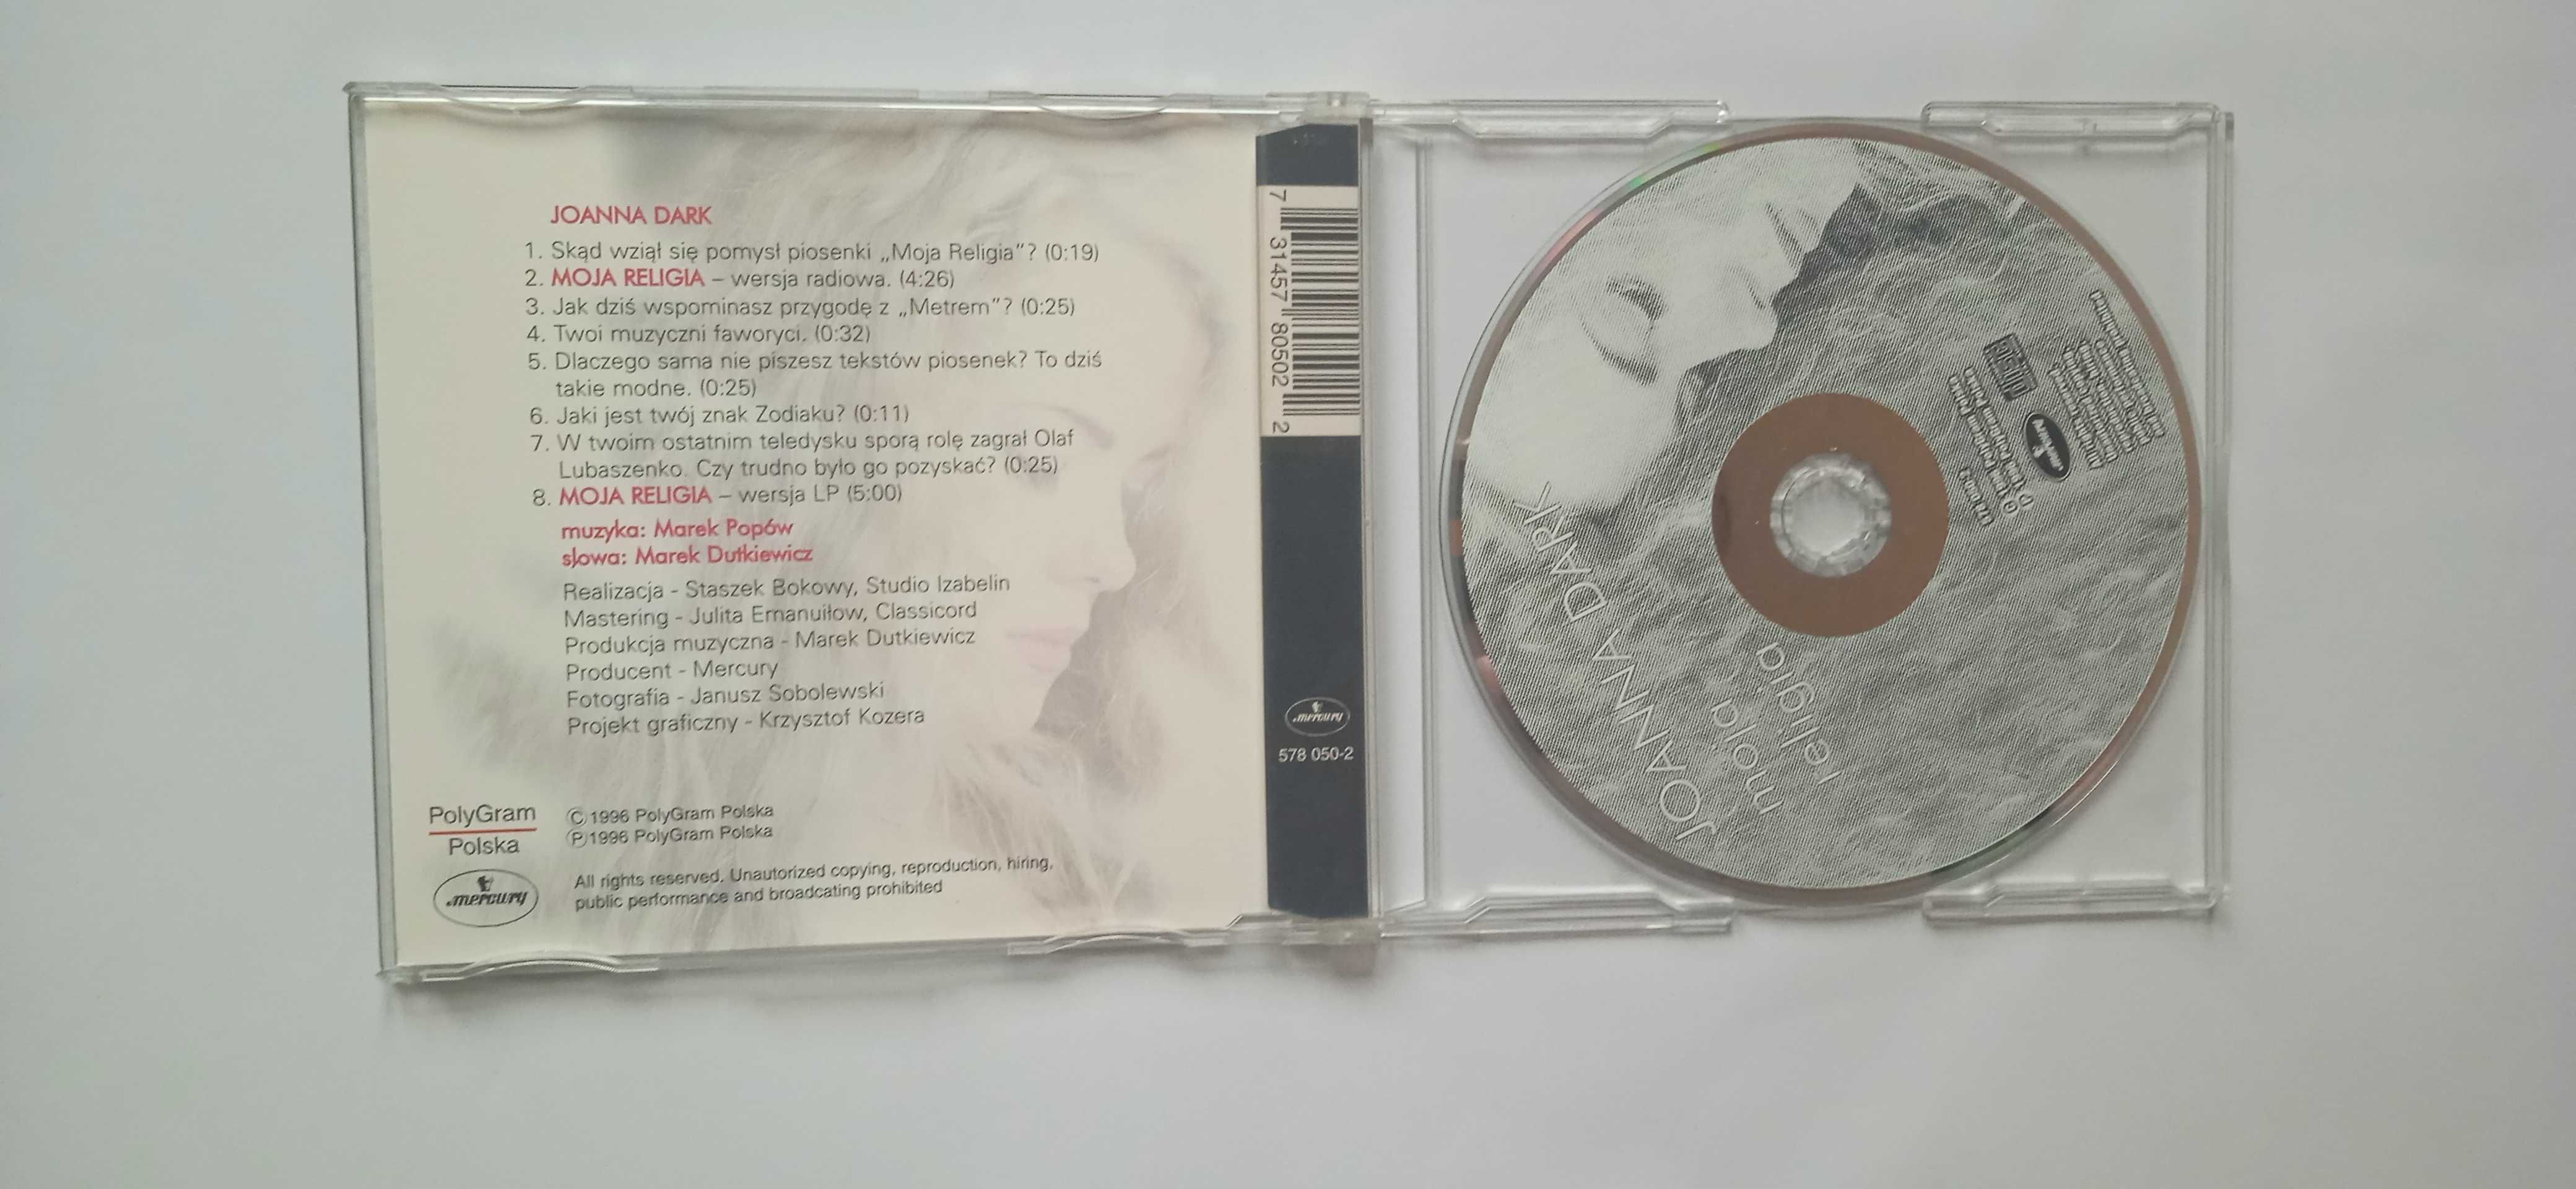 singiel CD "Moja religia" Joanna Dark